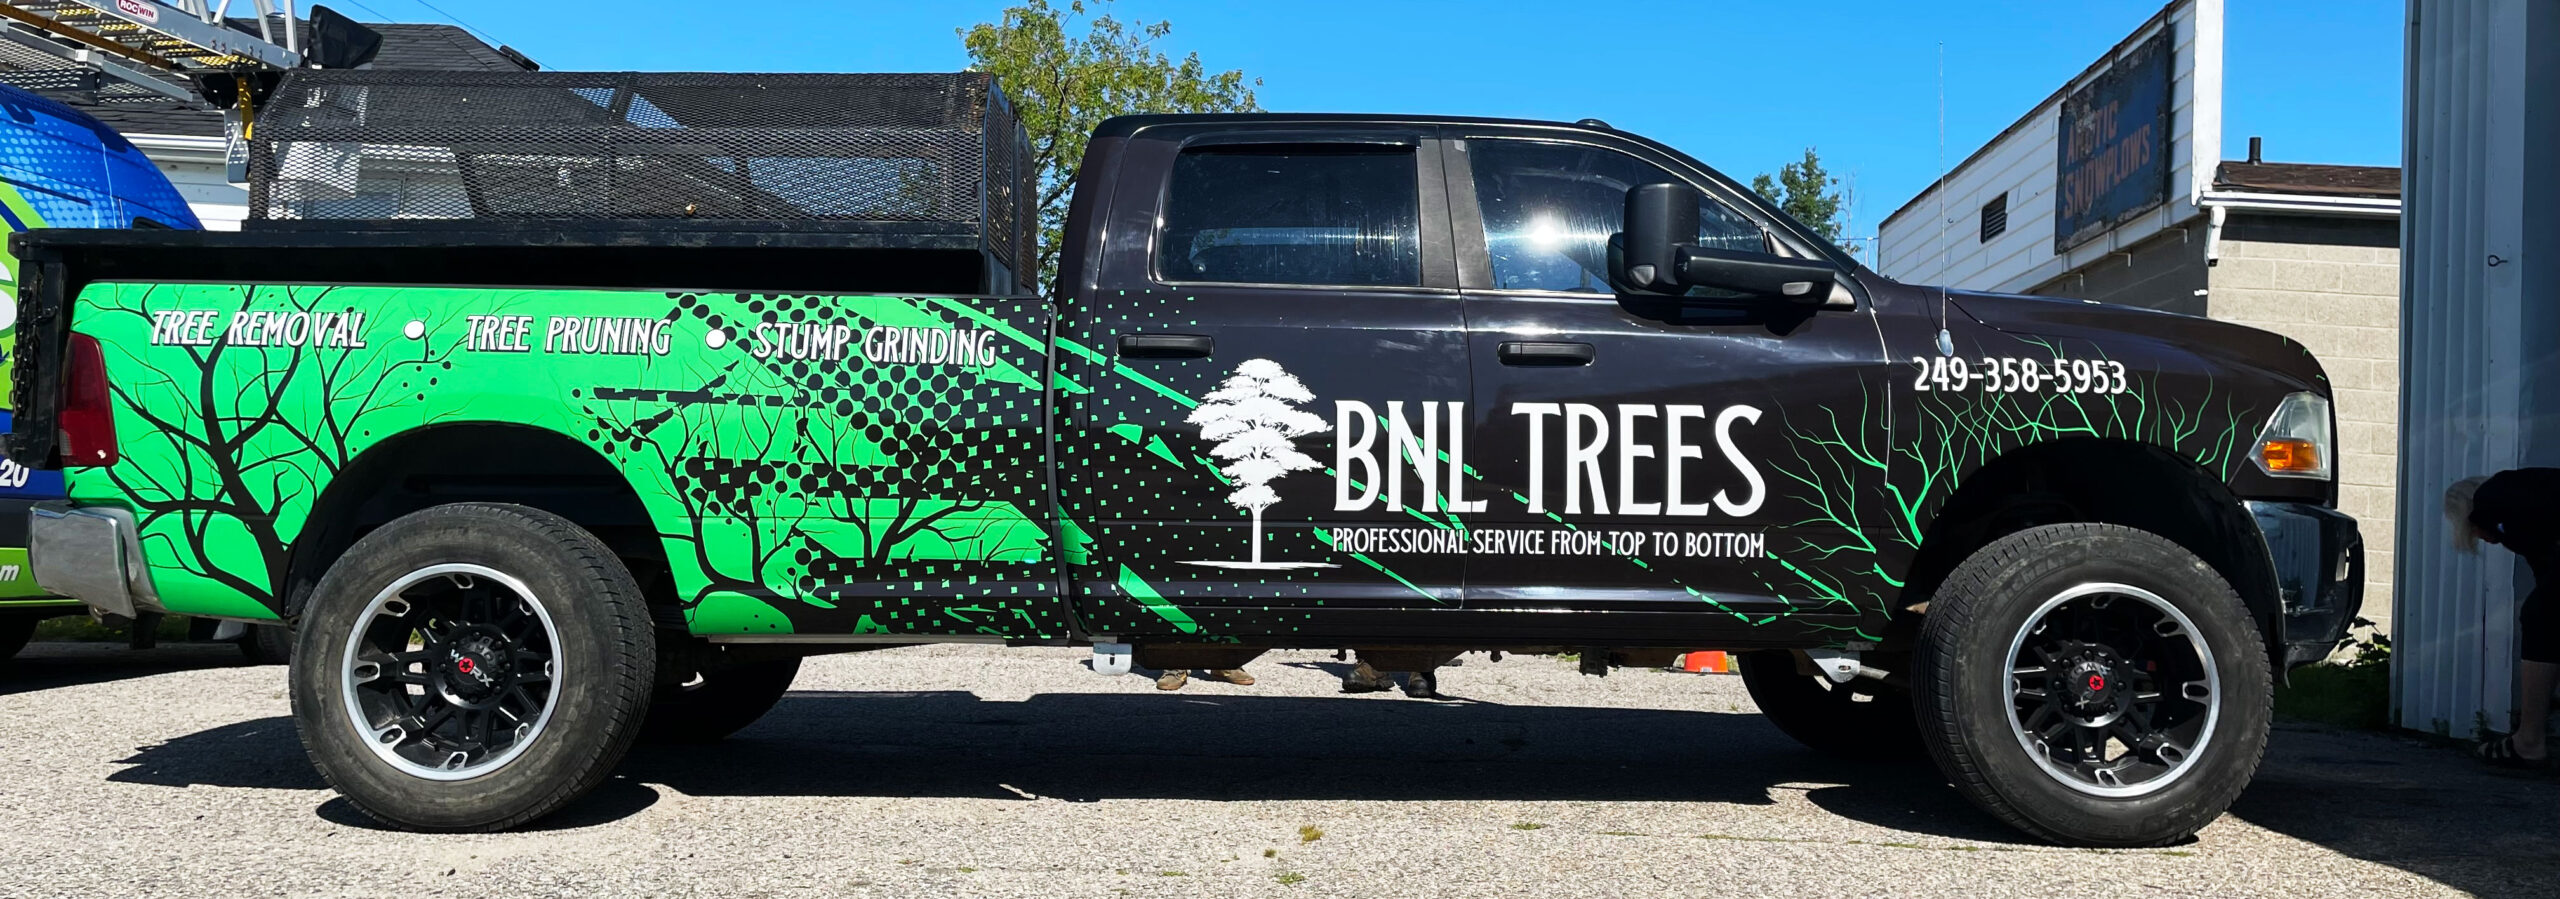 BNL Trees - Truck Wrap